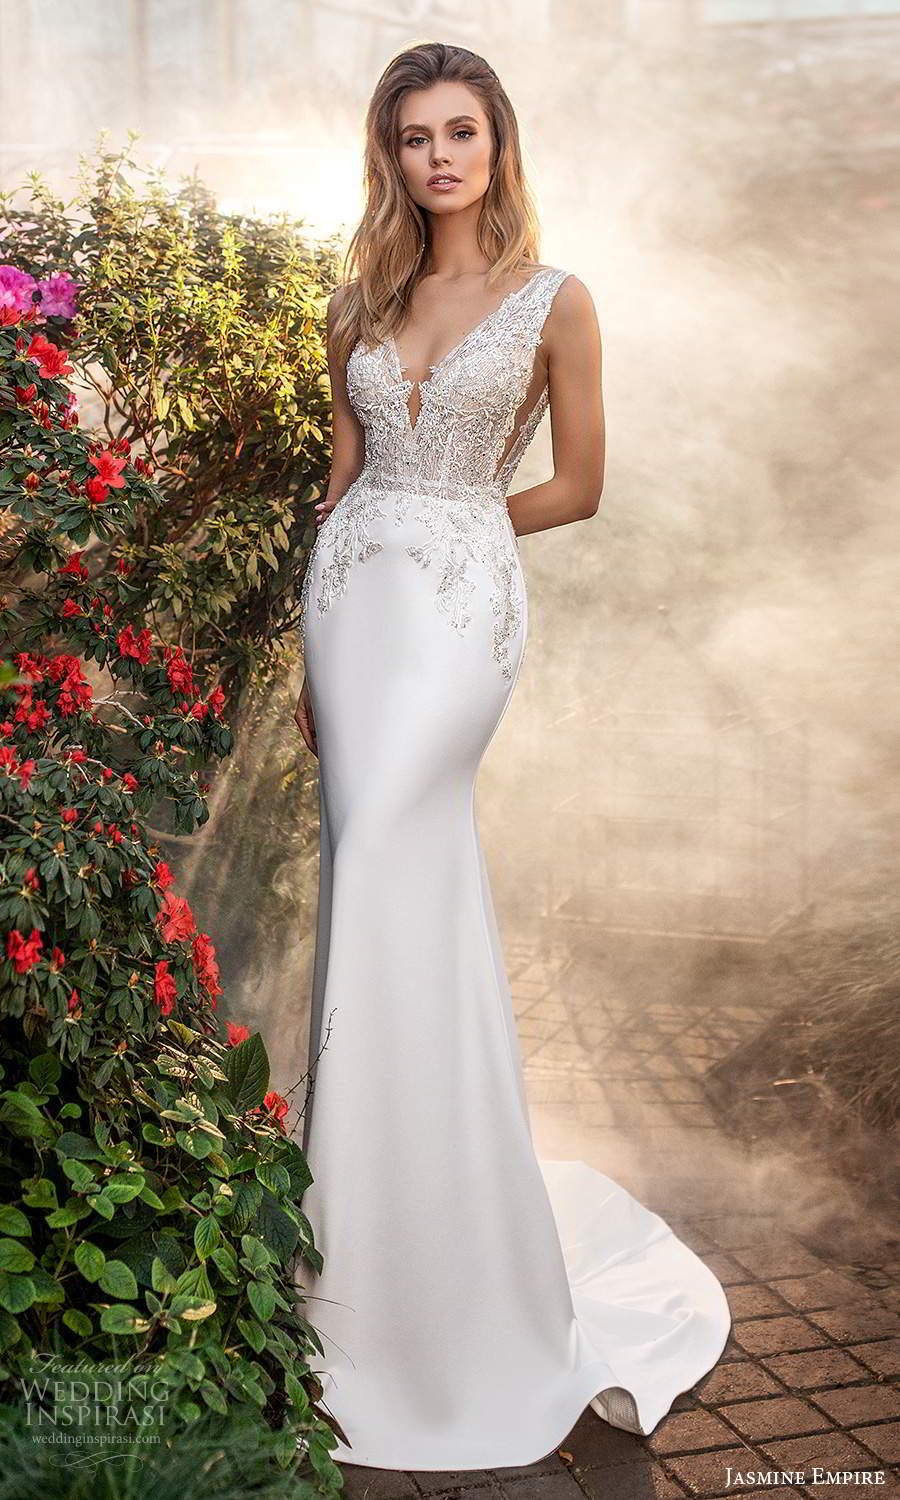 jasmine empire 2021 bridal sleeveless thick straps vneckline heavil embellished bodice clean skirt sheath wedding dress chapel train (26) mv